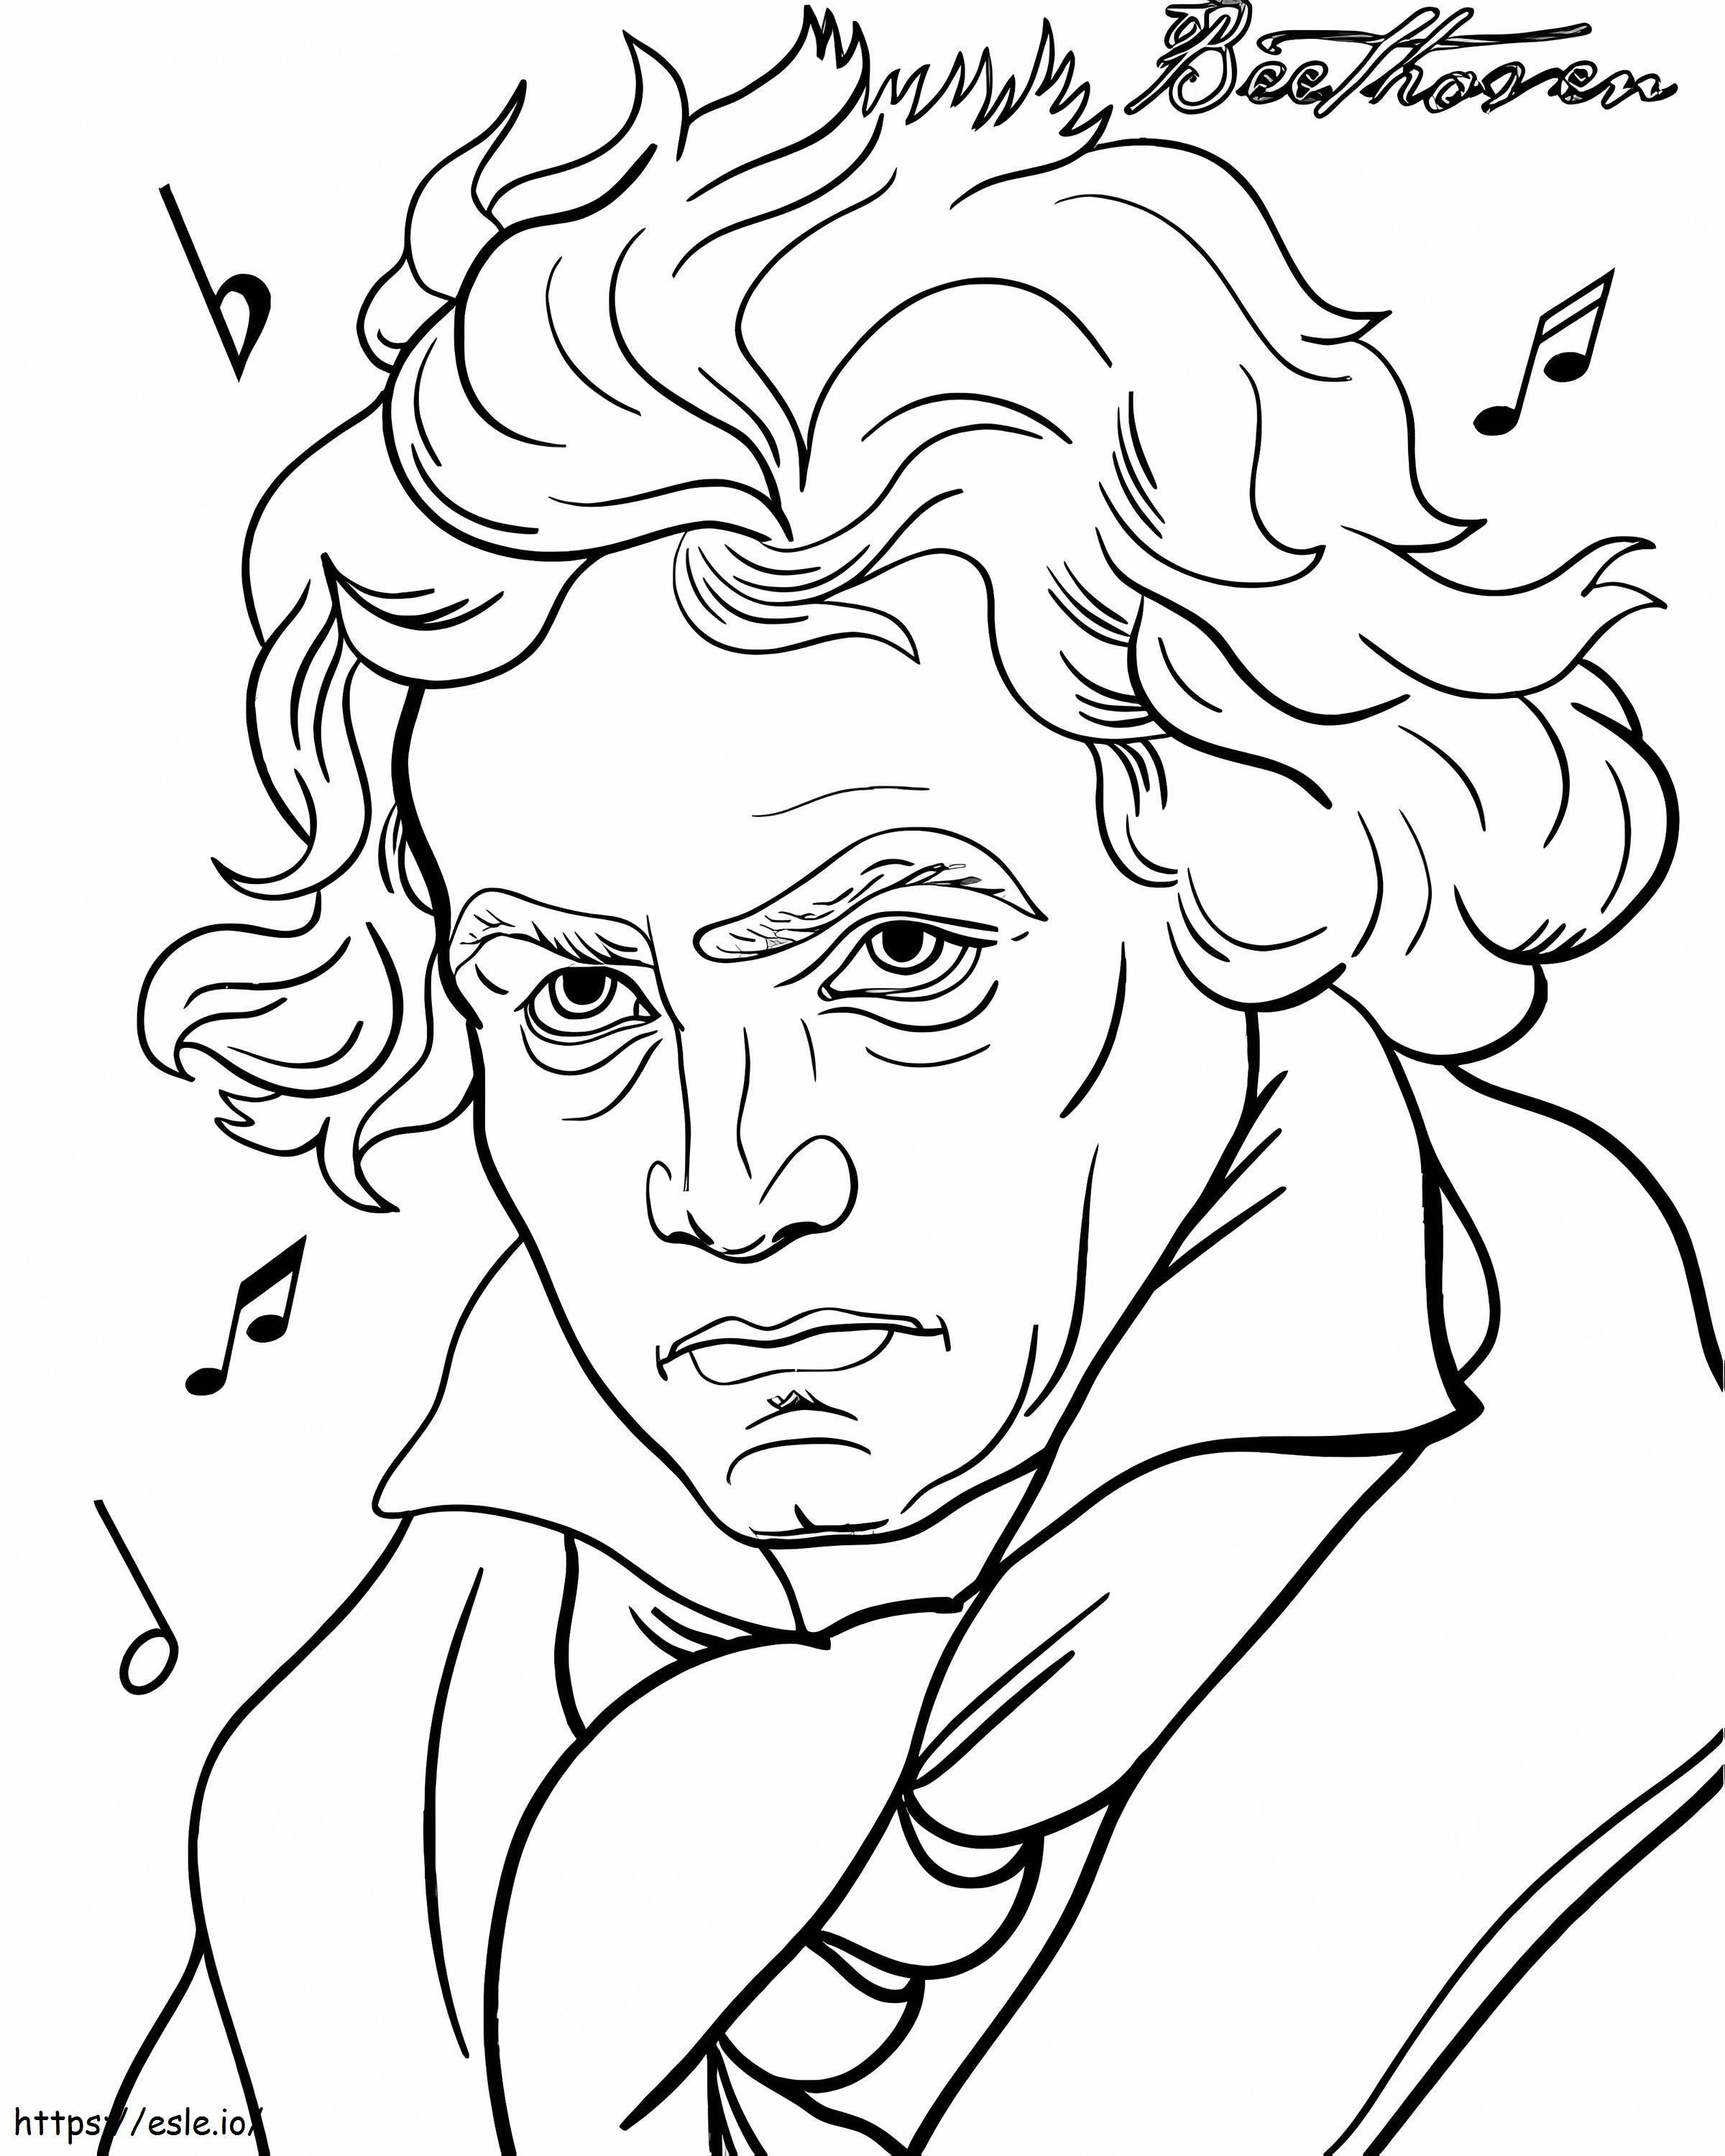 Beethovena kolorowanka